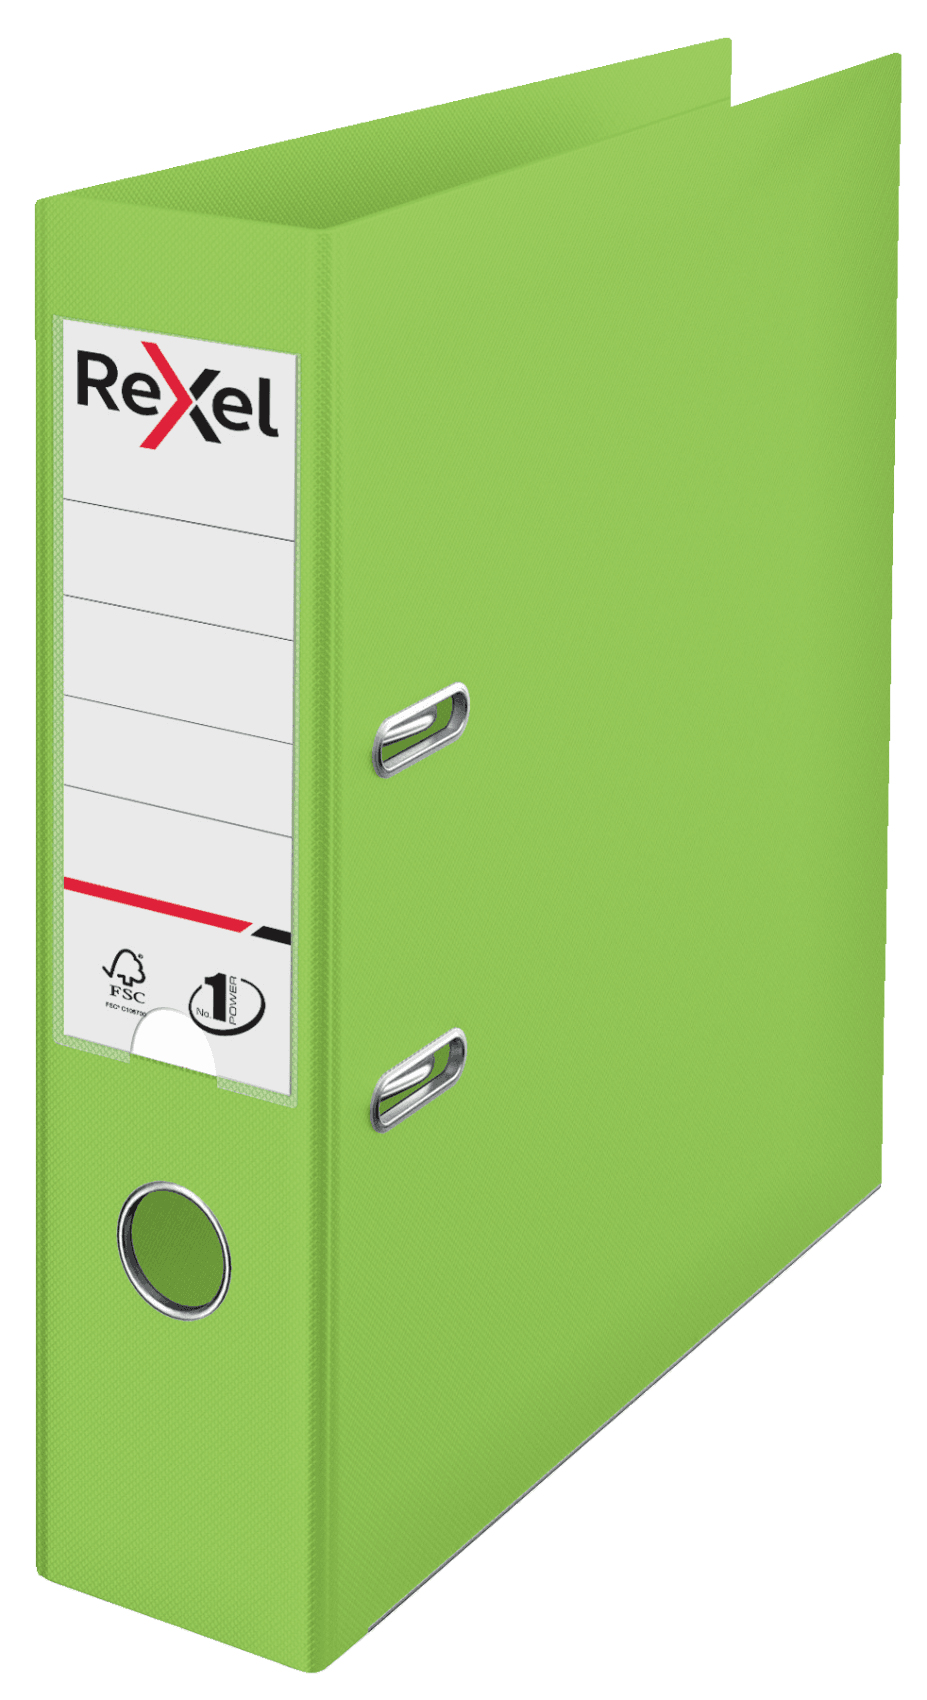 Rexel Choices 75mm Lever Arch File Polypropylene A4 Green 2115504